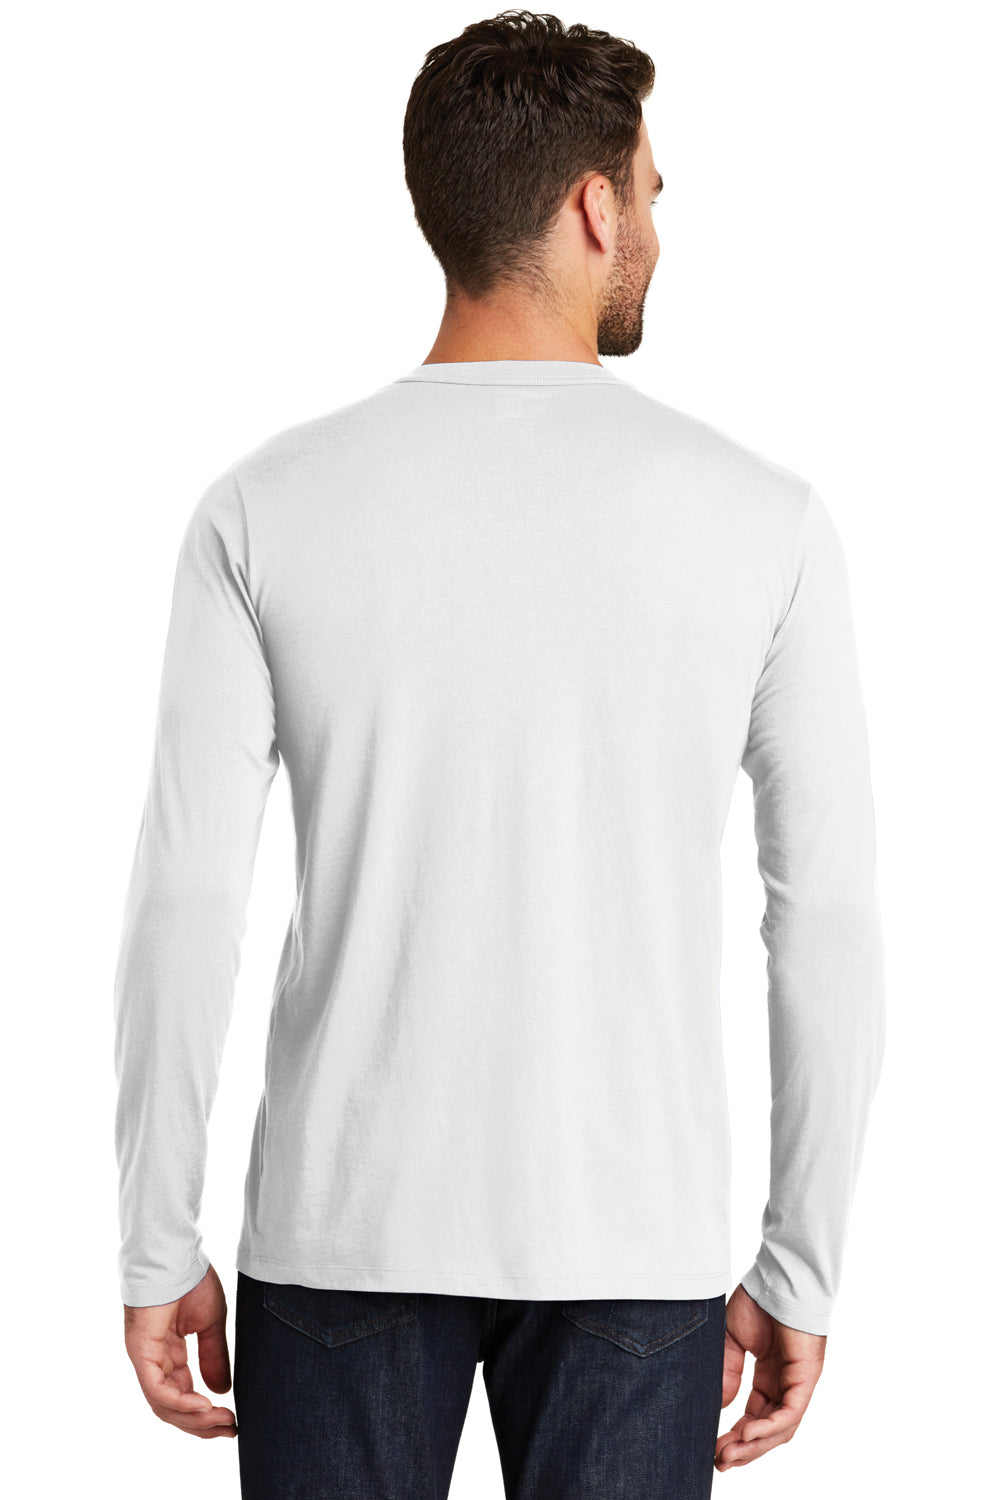 New Era NEA102 Mens Heritage Long Sleeve Crewneck T-Shirt White Back